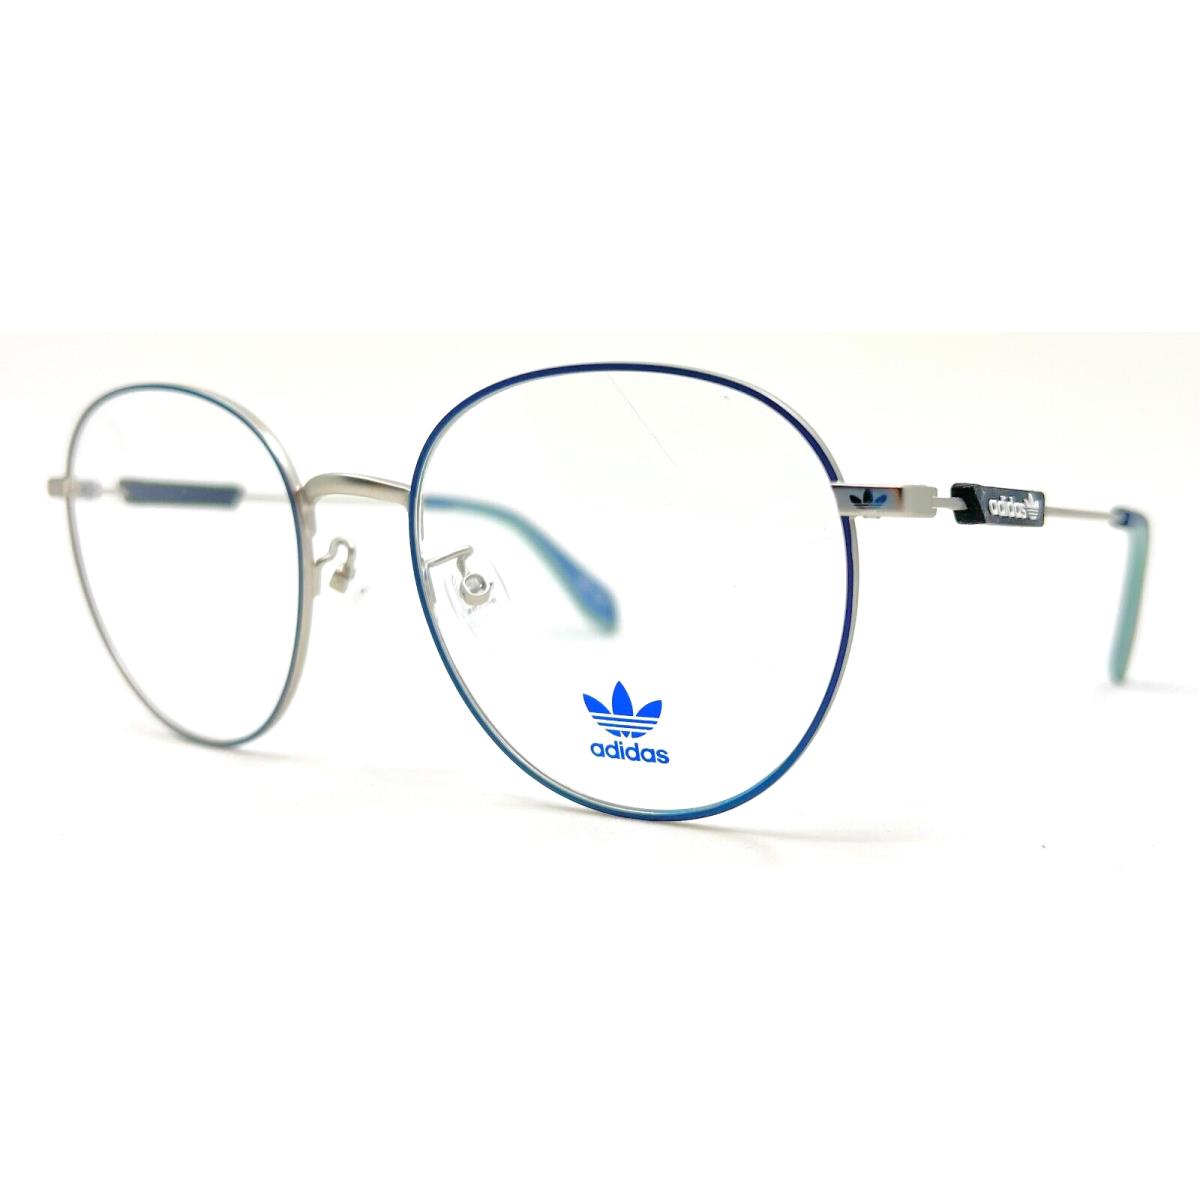 Adidas Originals - OR5033 092 54/19/145 -blue Eyeglasses Case